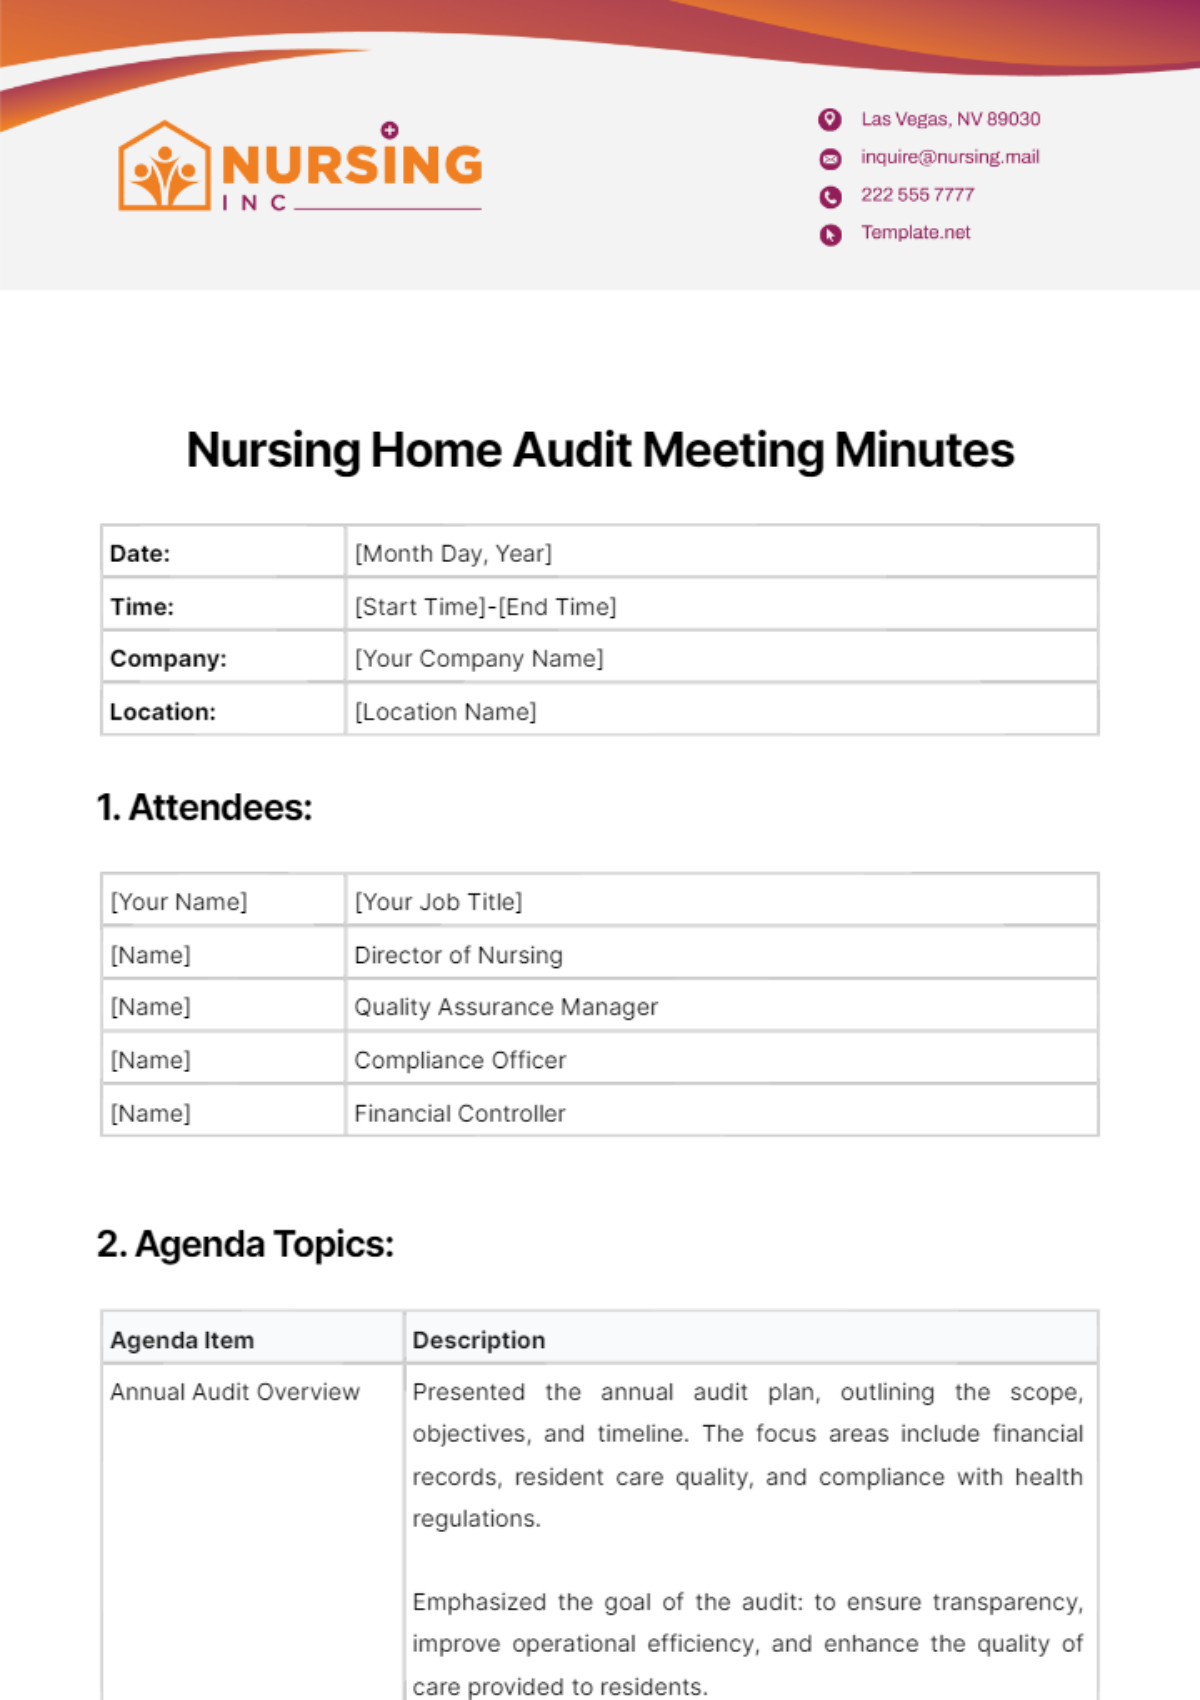 Nursing Home Audit Meeting Minutes Template